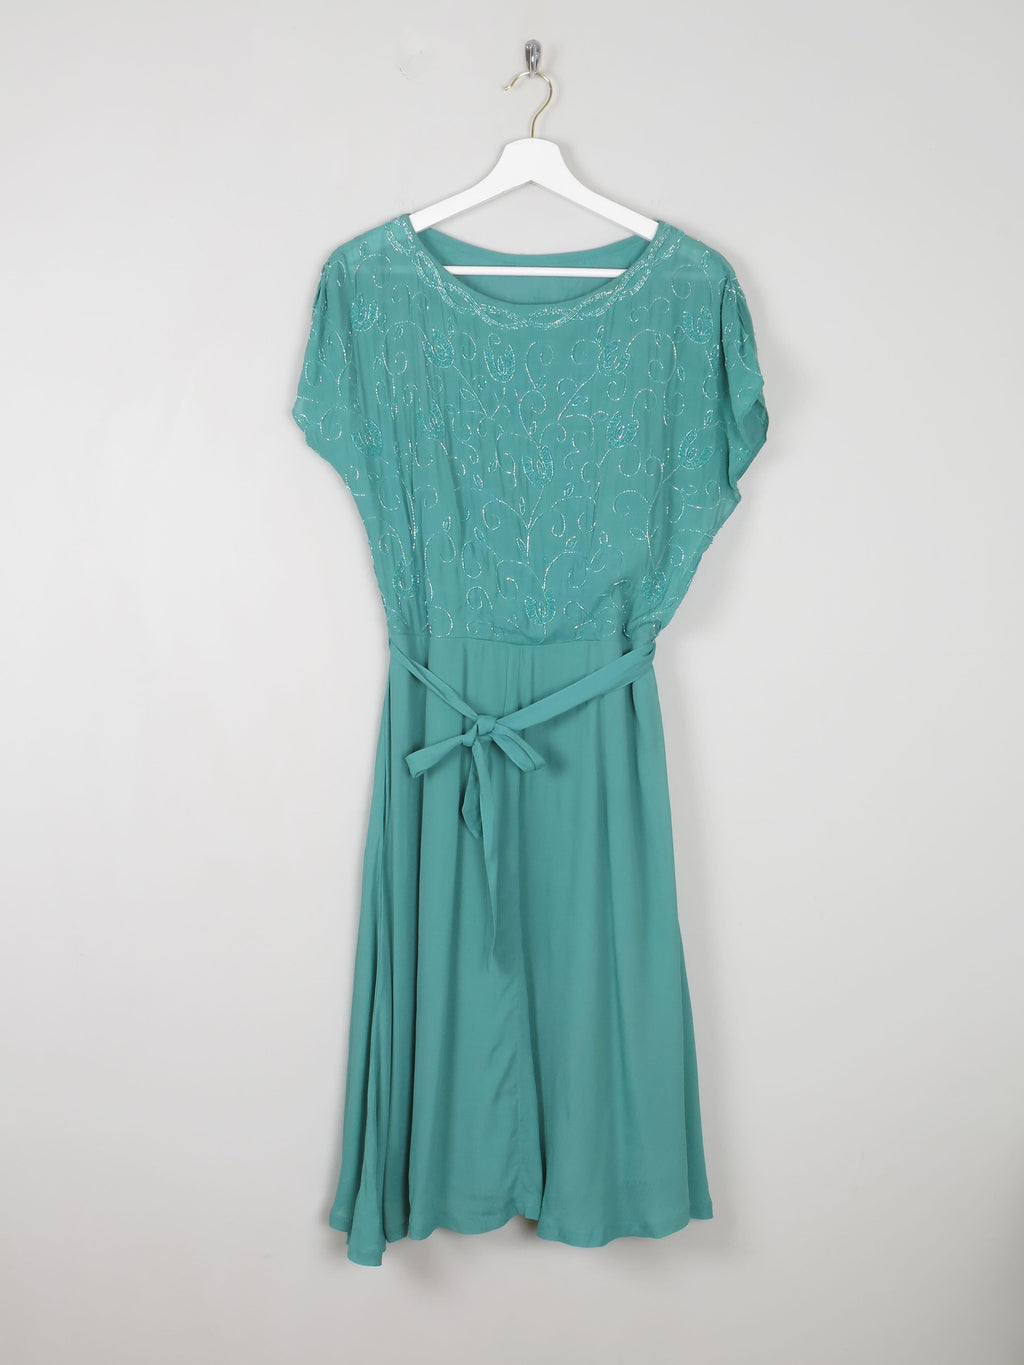 Aqua Beaded 1950s Vintage Style Beaded Dress 10 - The Harlequin